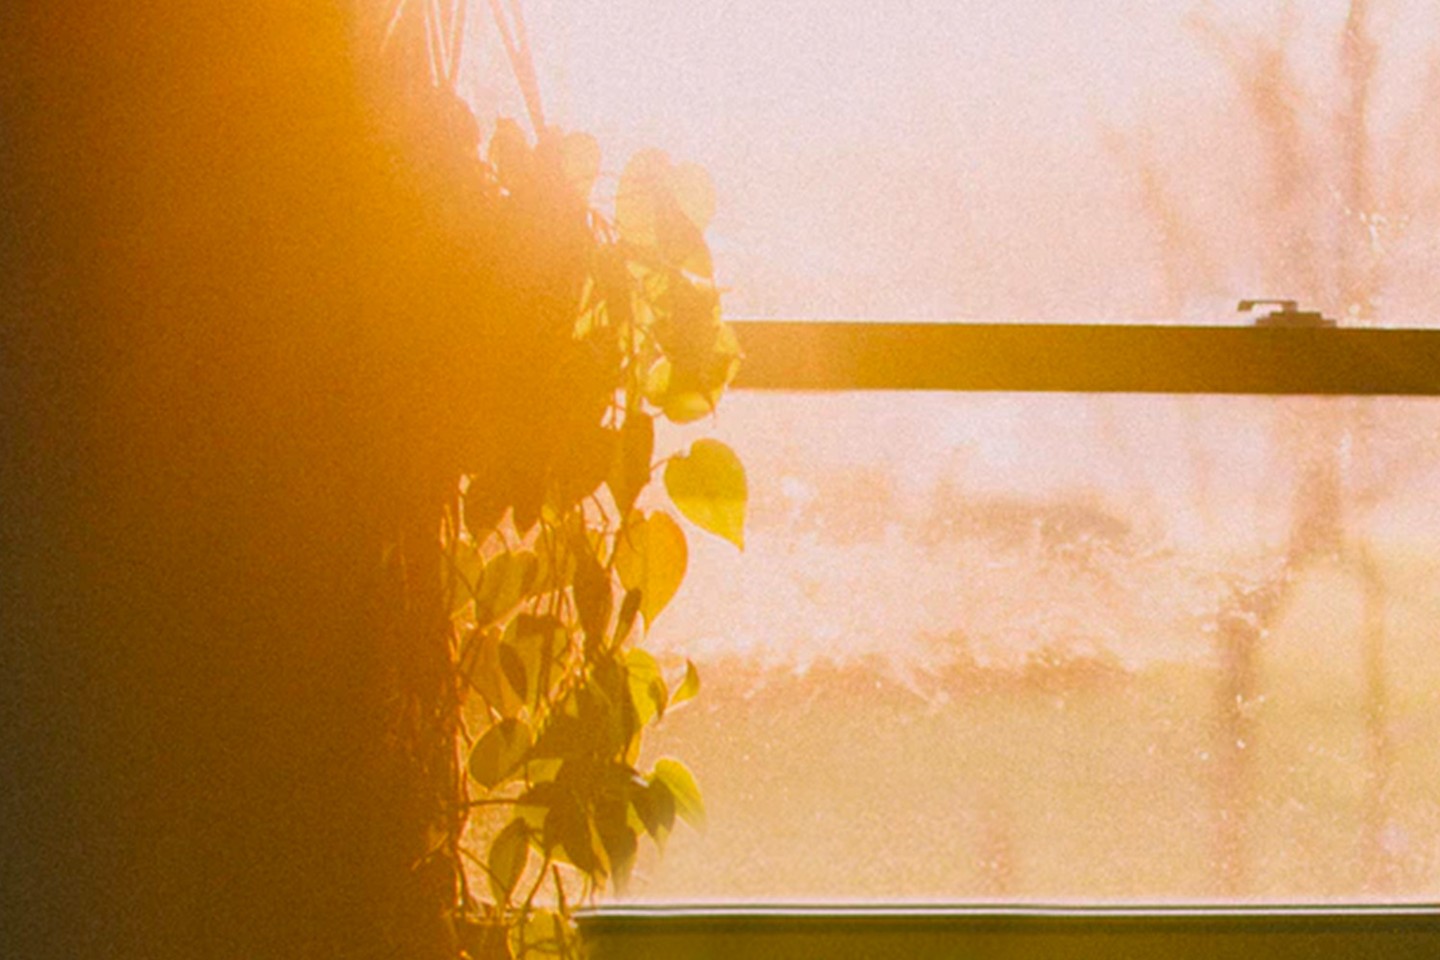 Sunrise through window with plants